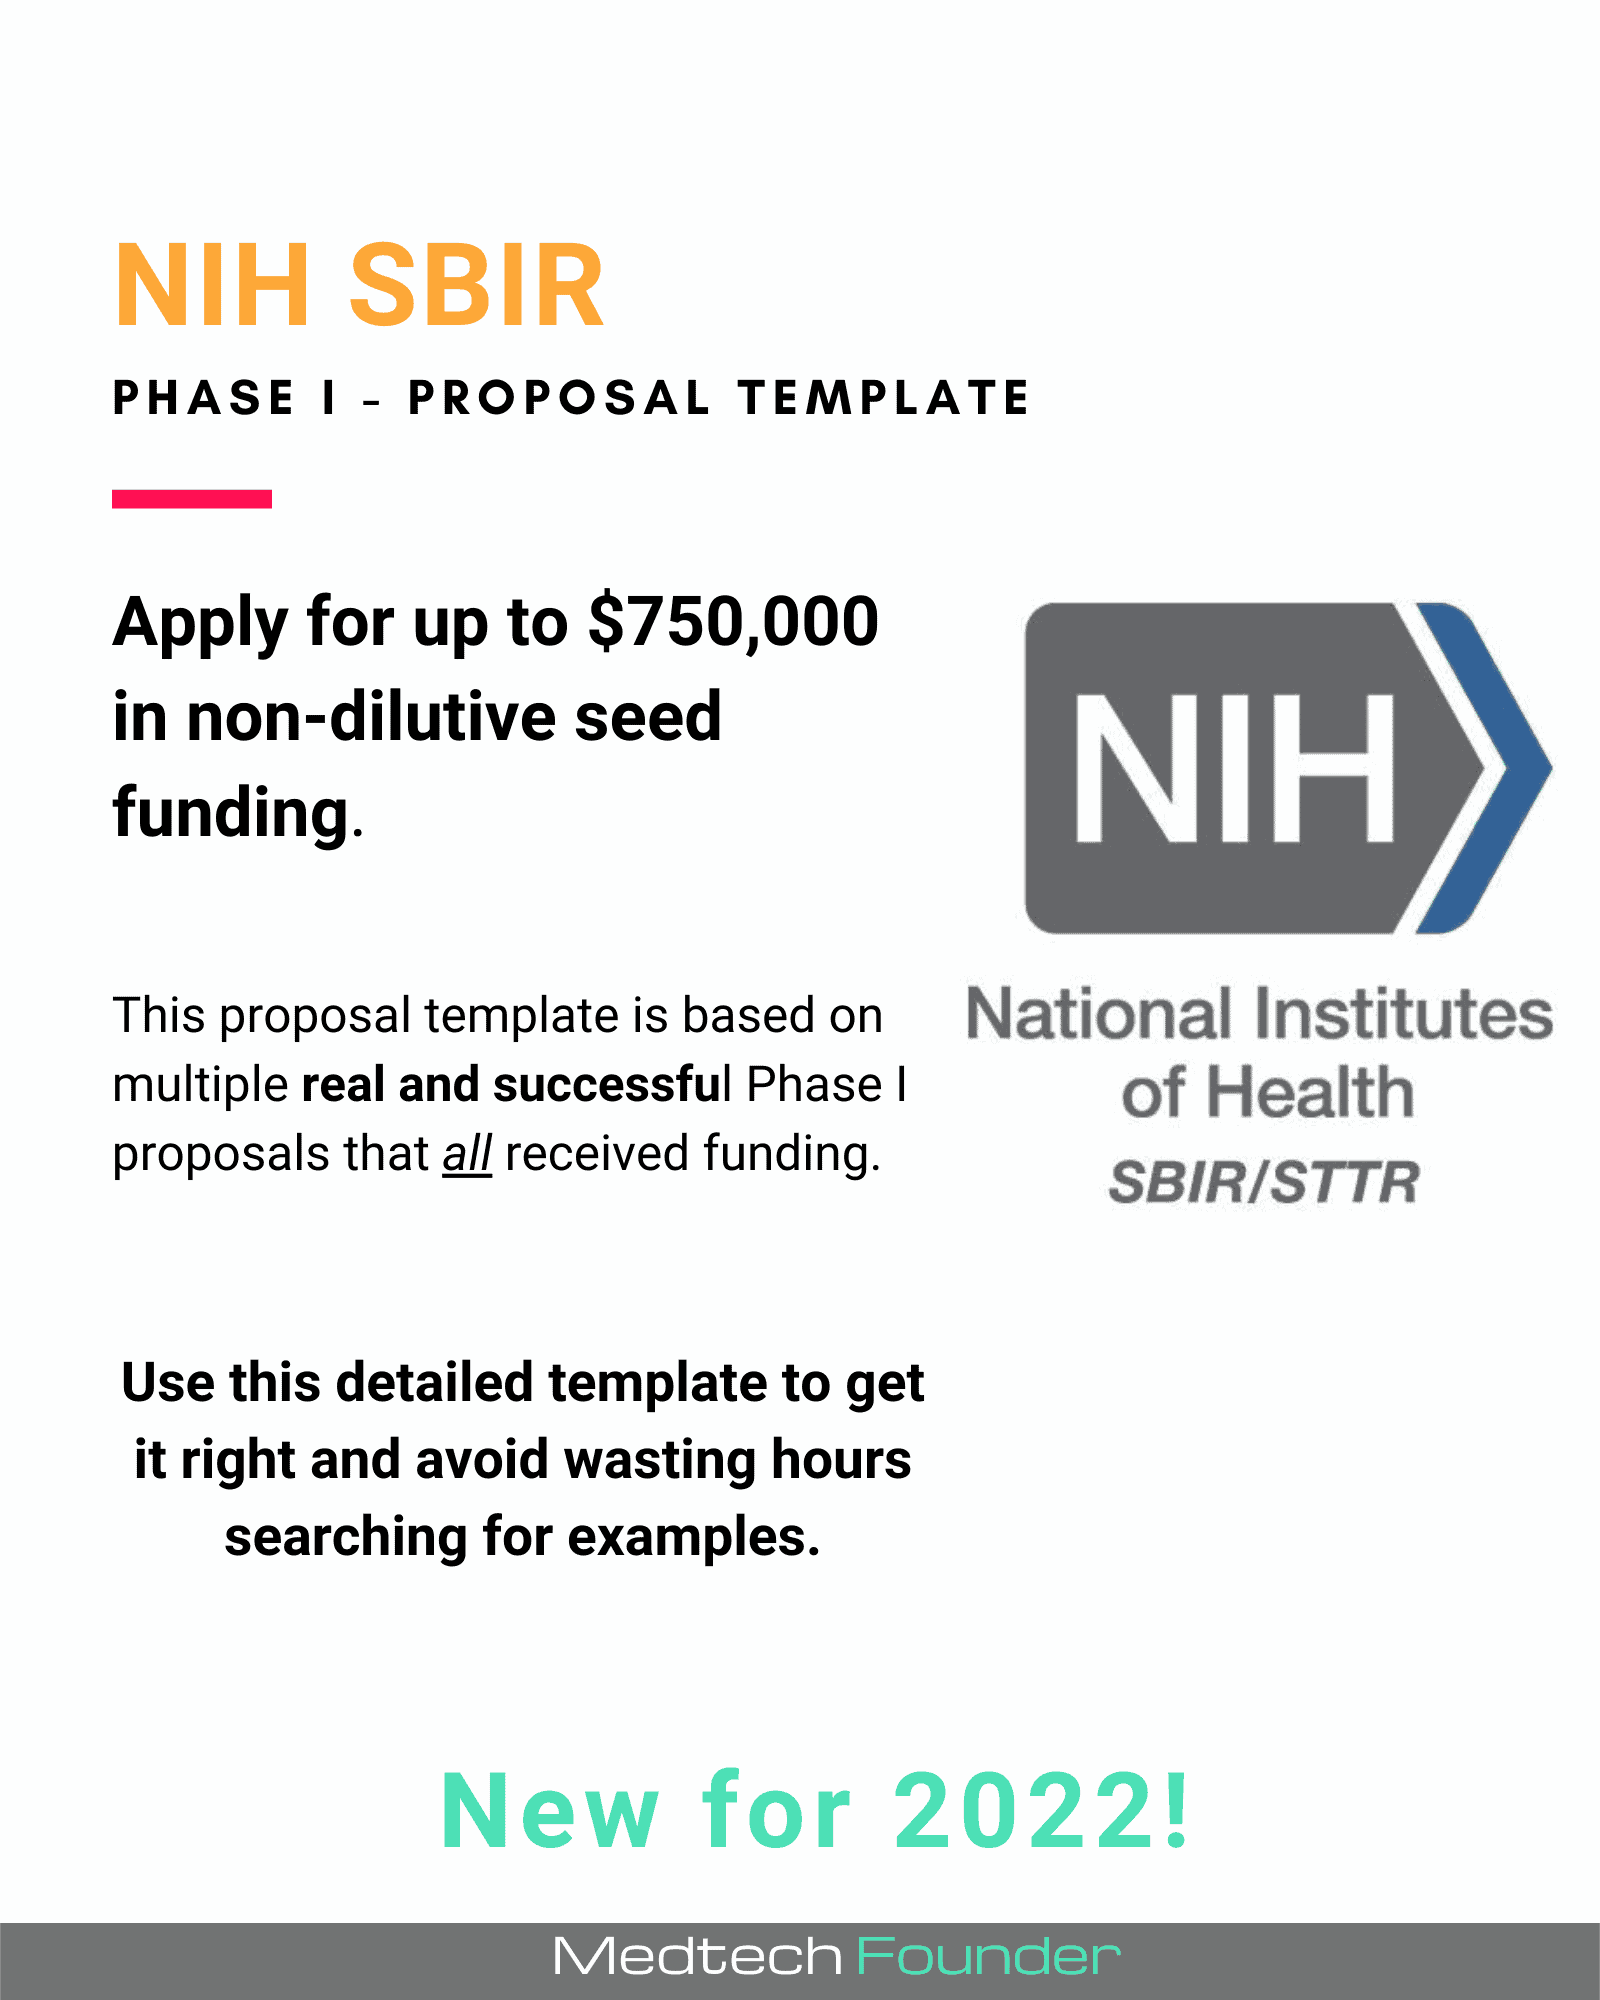 NIH SBIR Phase 1 Proposal Template